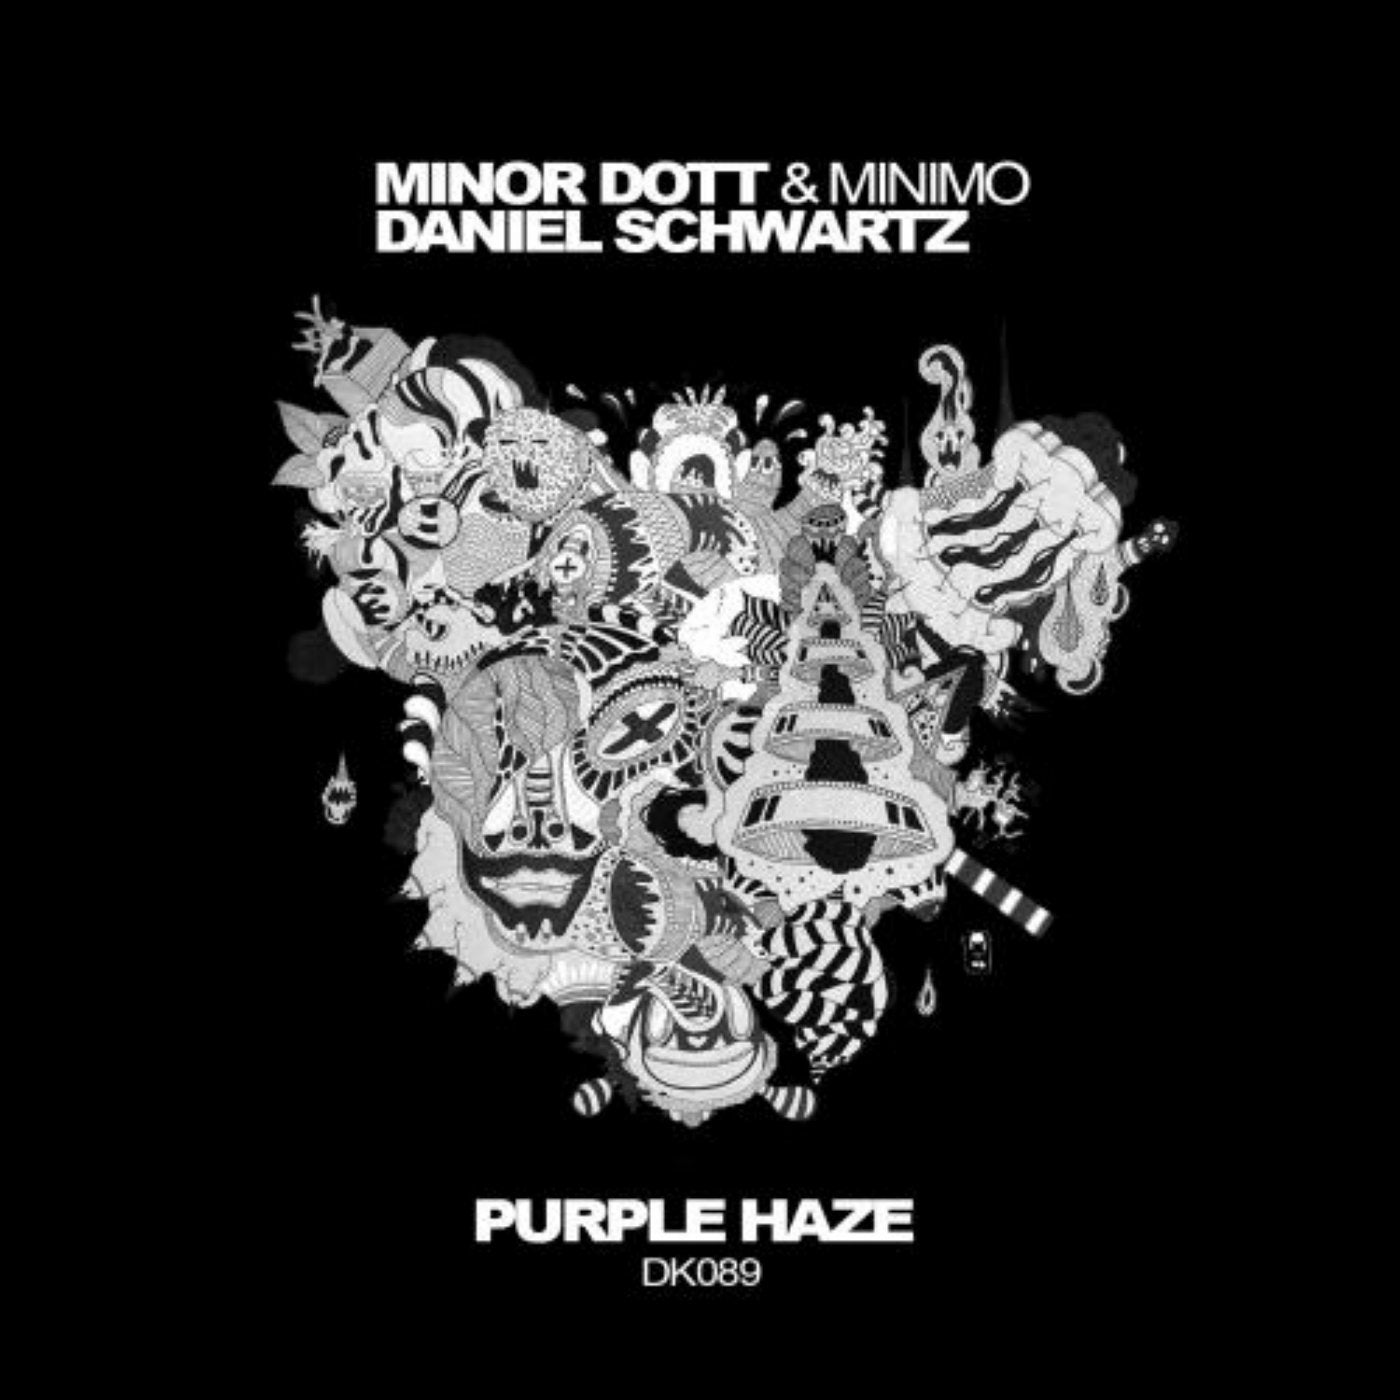 Purple Haze EP